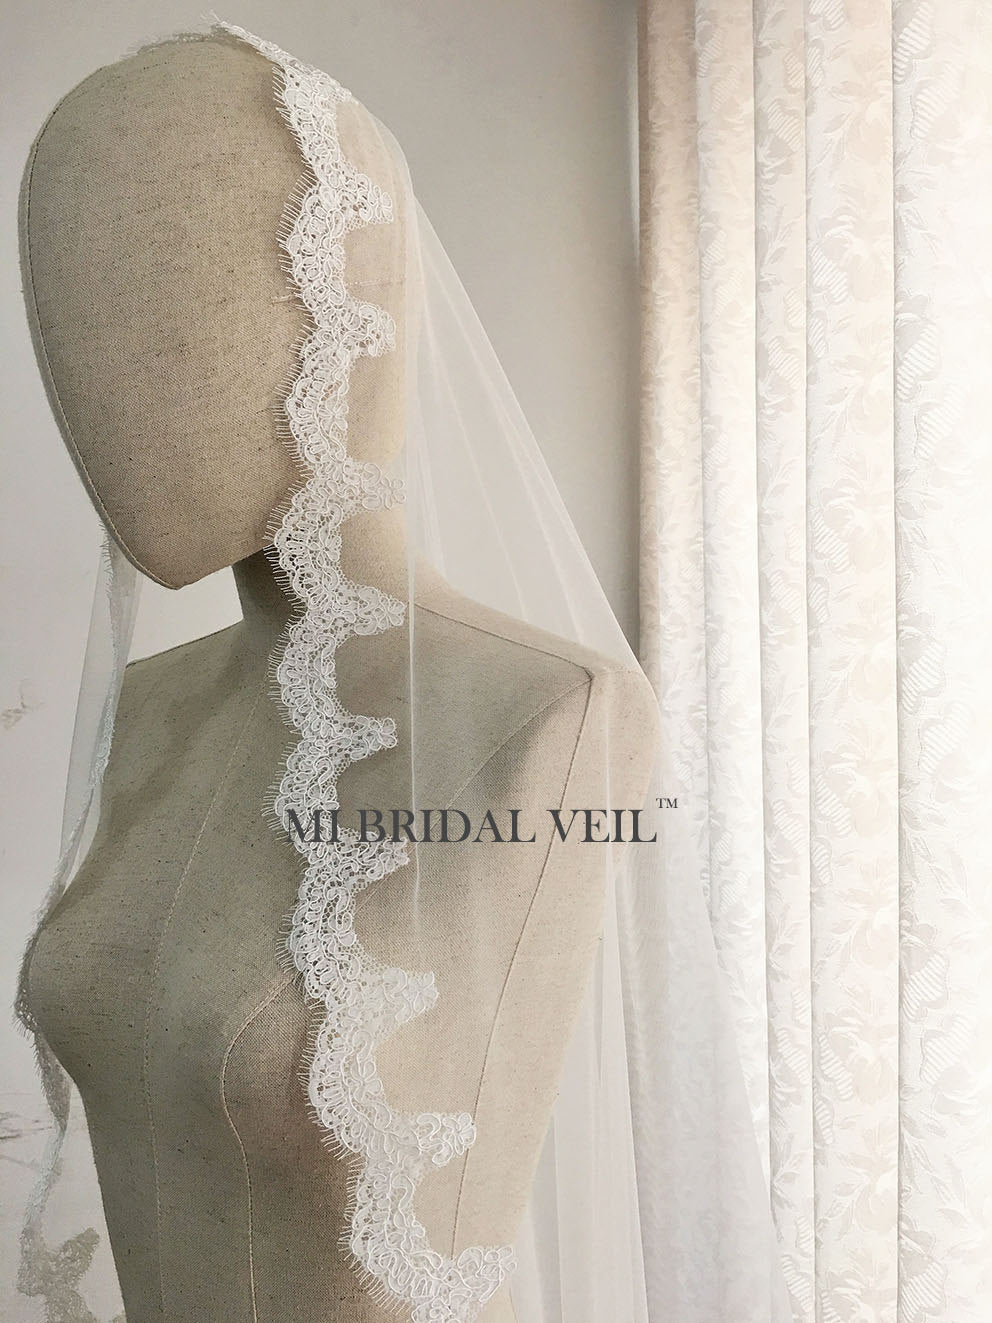 Mantilla Lace Wedding Veil, Fingertip Small Eyelash Lace Veil, Mi Bridal